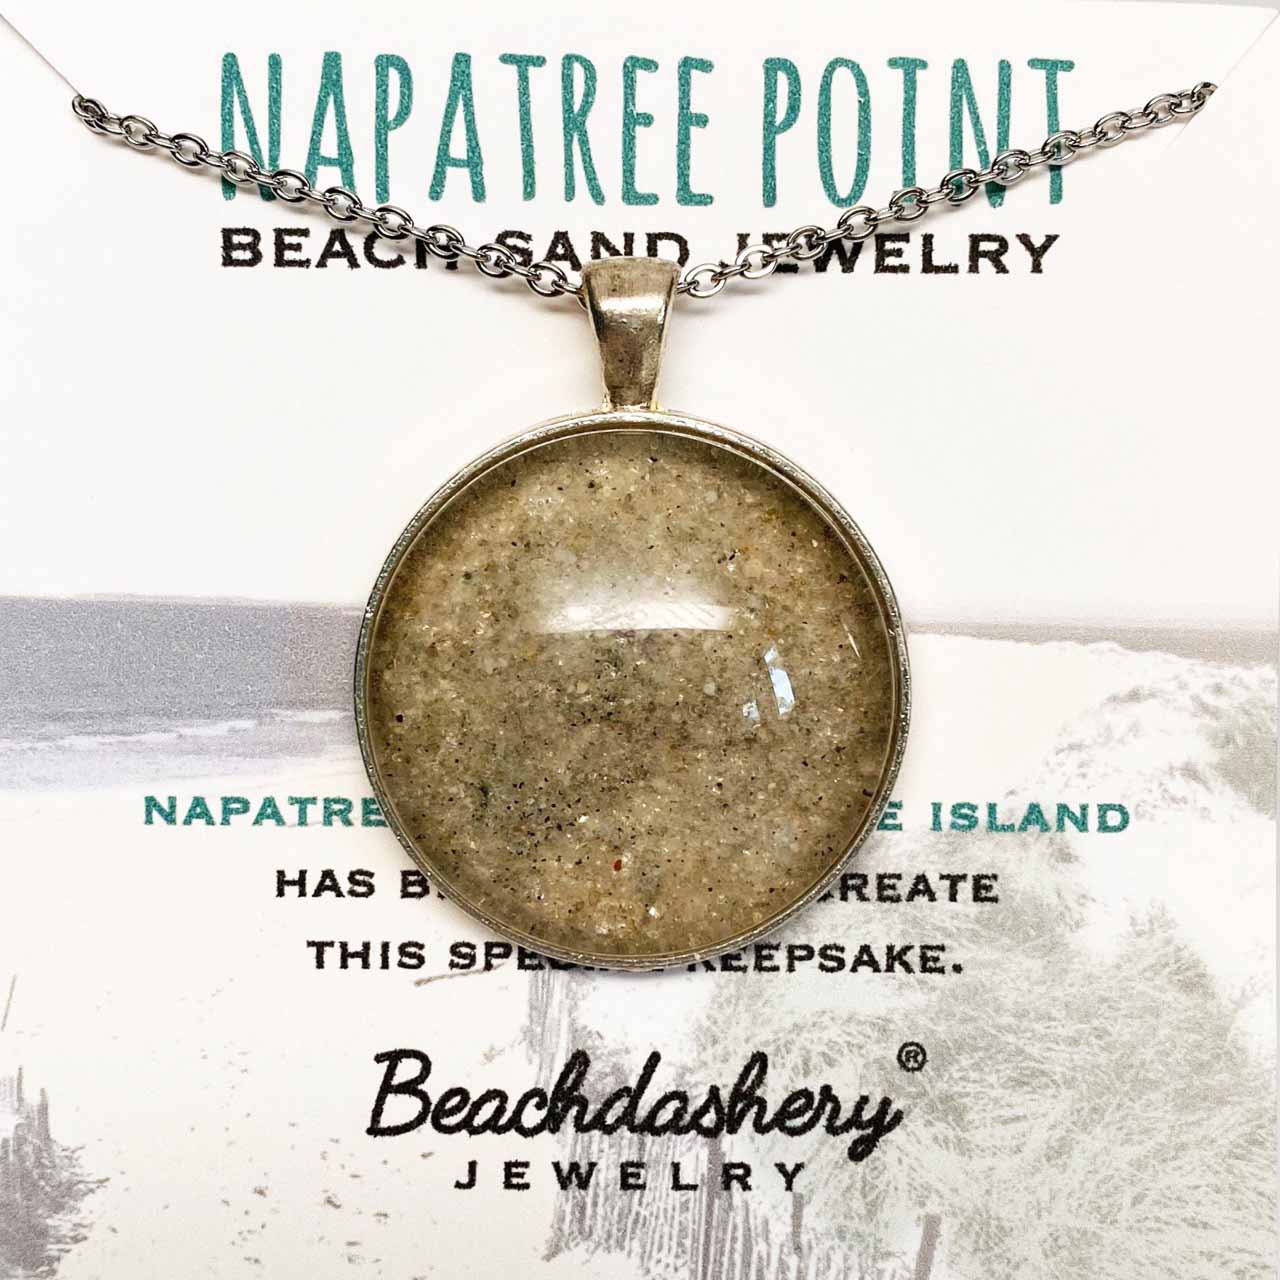 Load image into Gallery viewer, Napatree Point Beach Rhode Island Sand Jewelry Beachdashery
